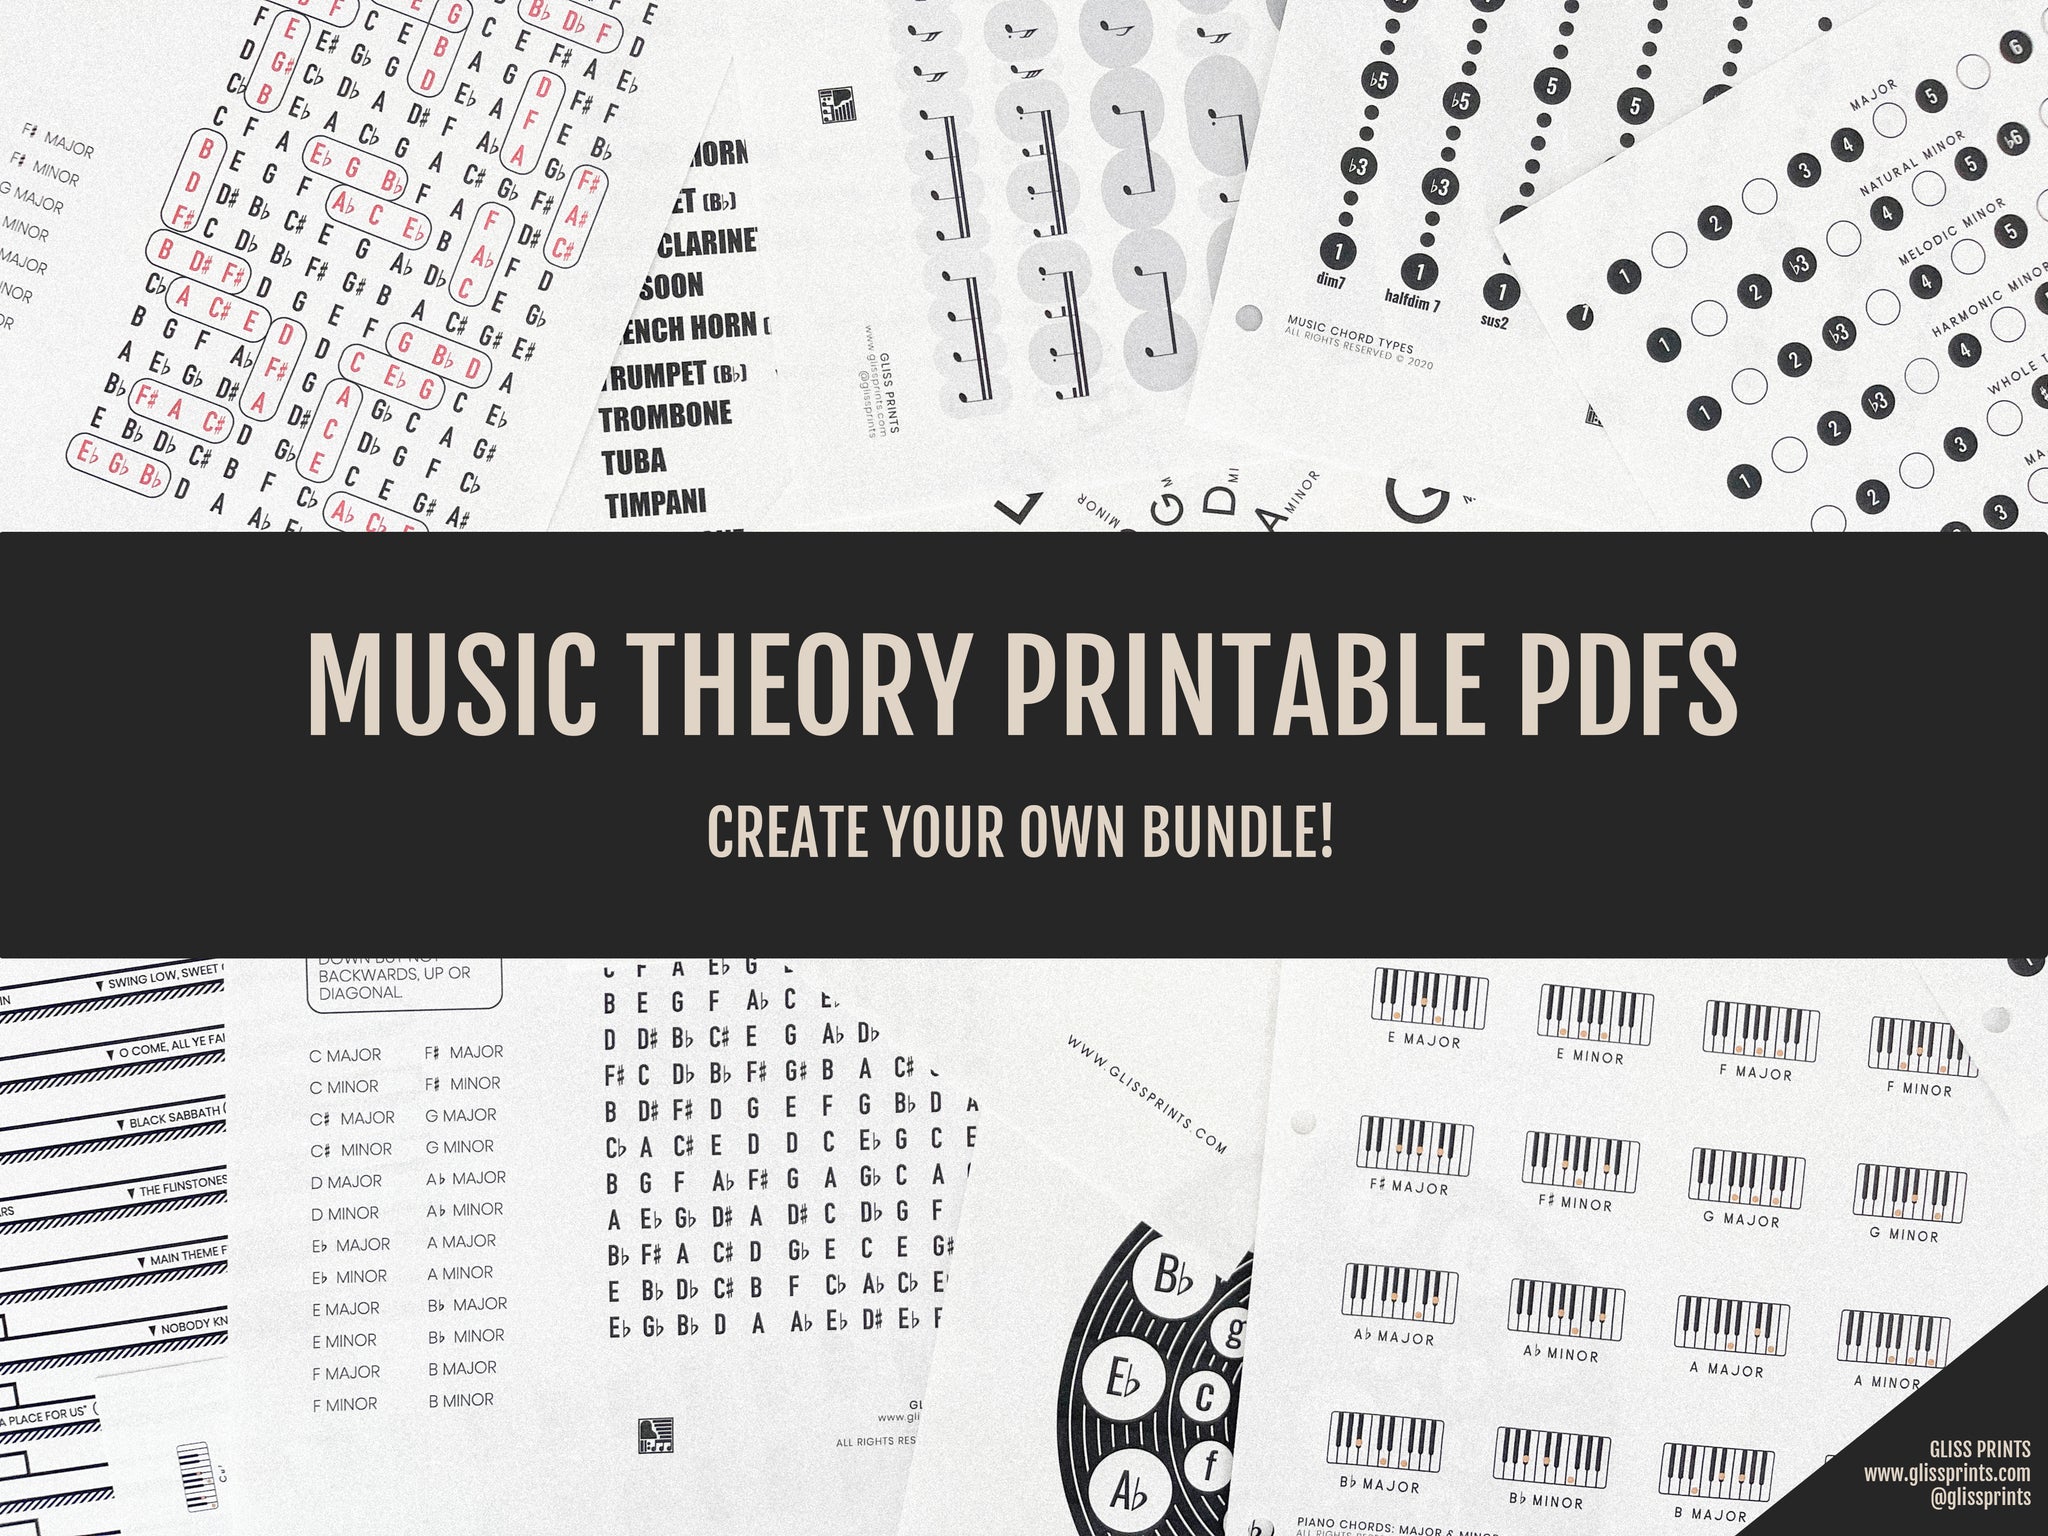 Printable Music Theory PDFs Bundles